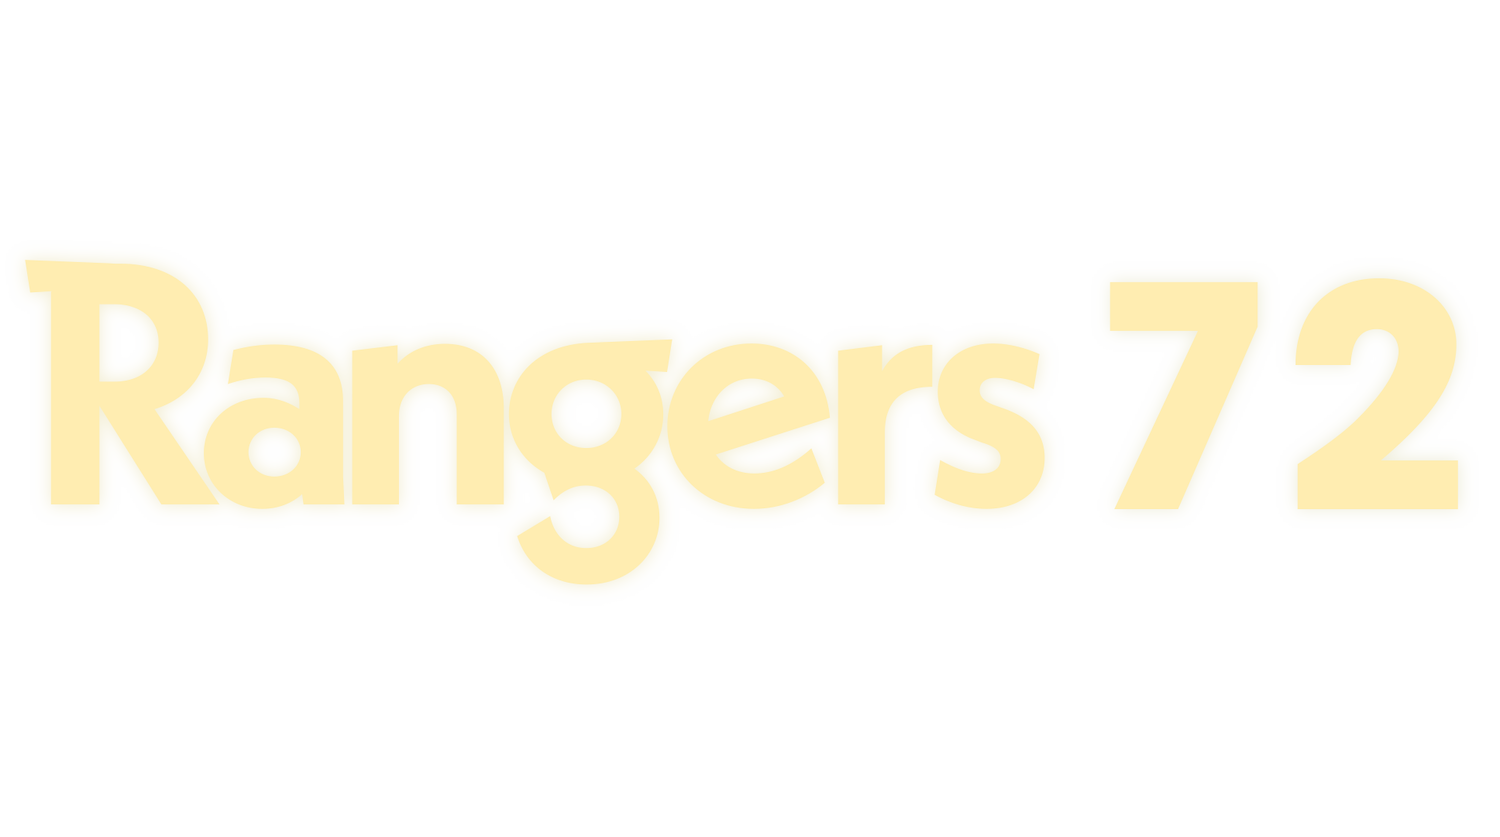 www.rangers72.com